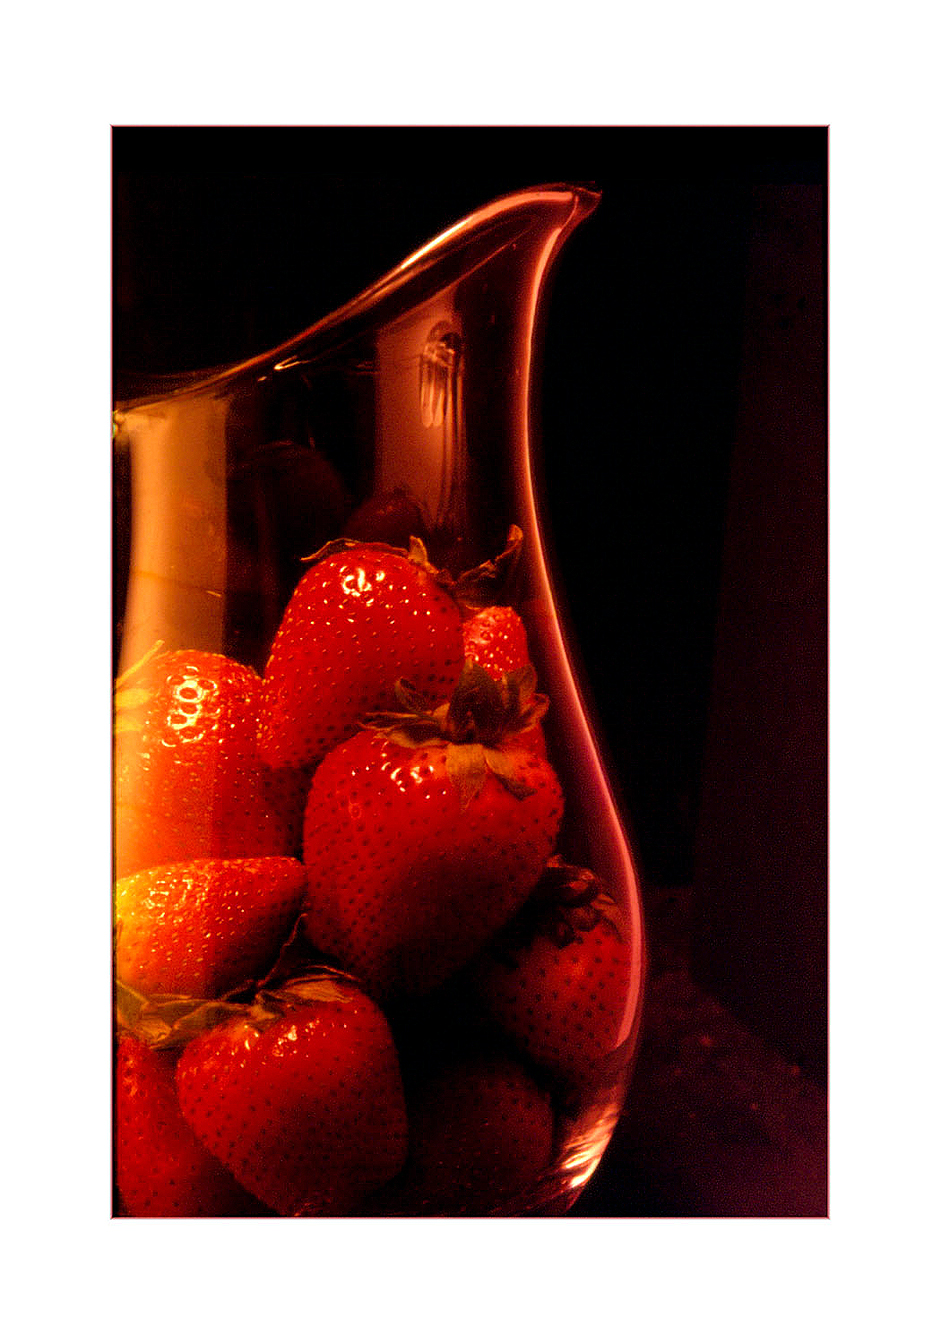 Studio Still: Strwberries in Pitcher. © High Cascade Studios.